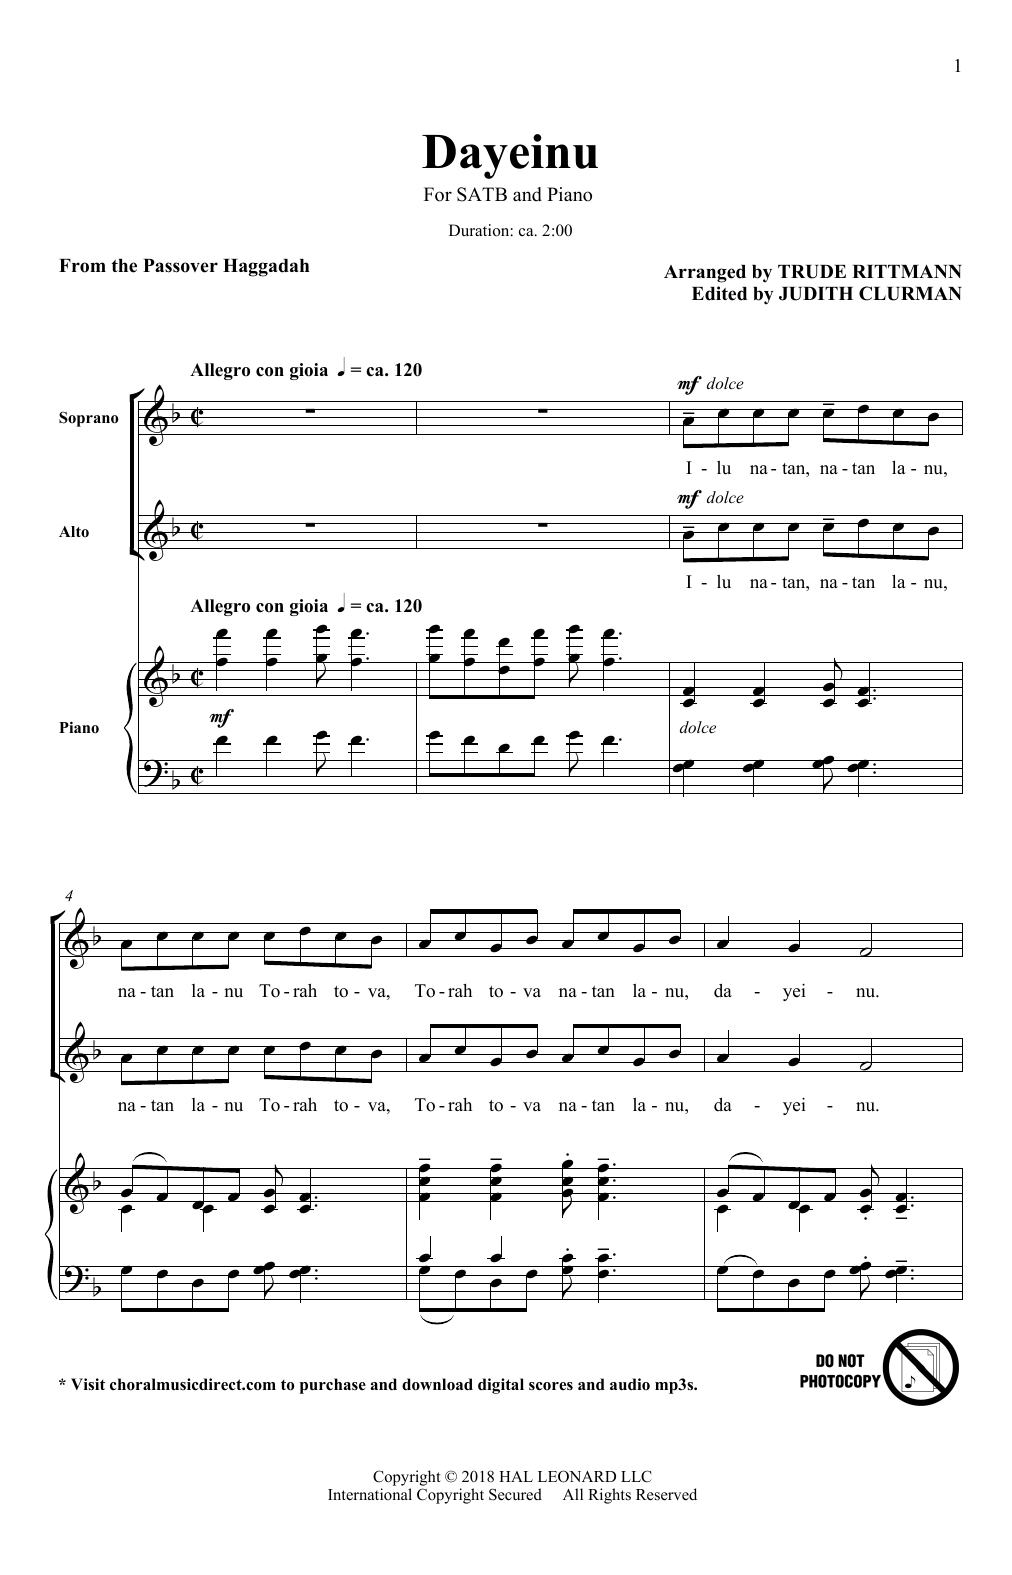 Trude Rittmann Dayeinu sheet music notes and chords arranged for SATB Choir